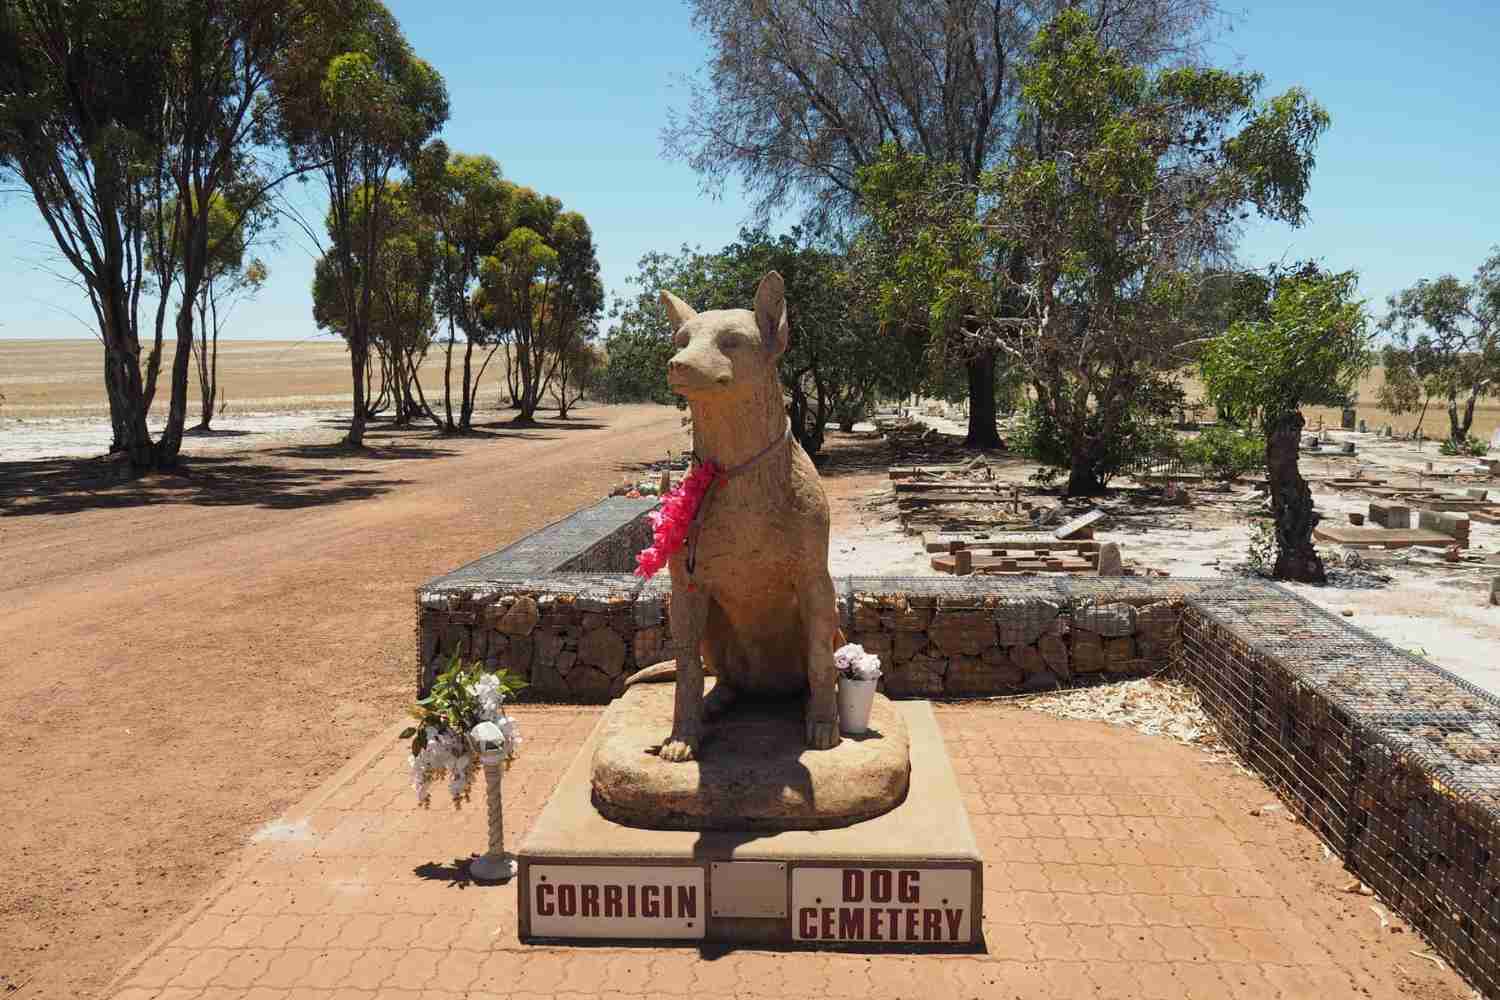 Corrigan Dog Cemetery in Western Australia